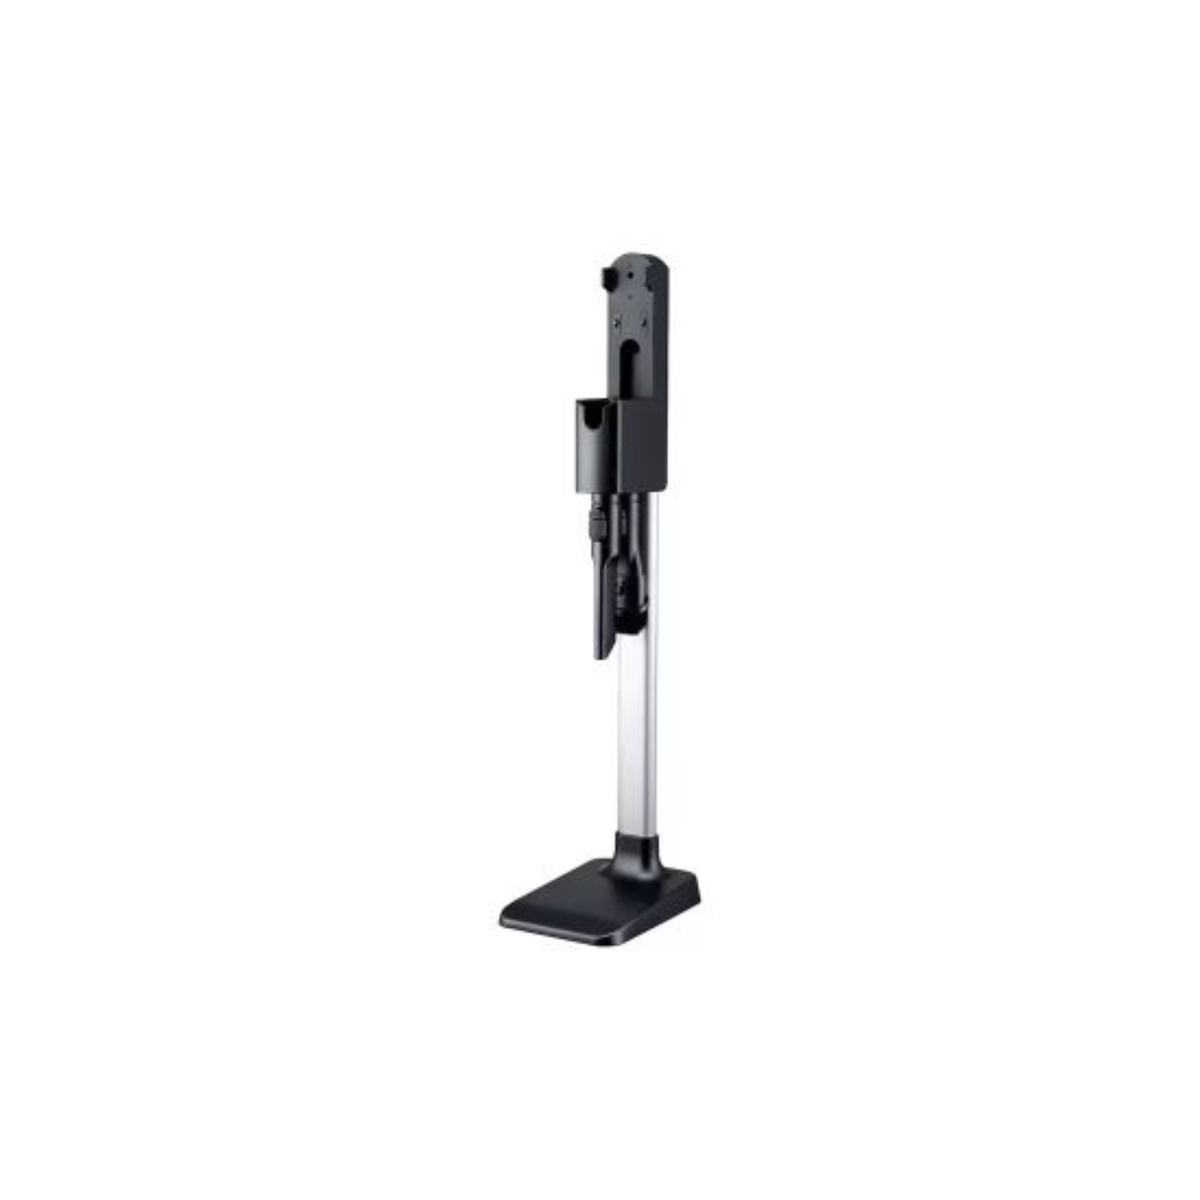 LG CordZero A9 Ultimate Cordless Stick Vacuum, Iron Grey, A9N-CORE